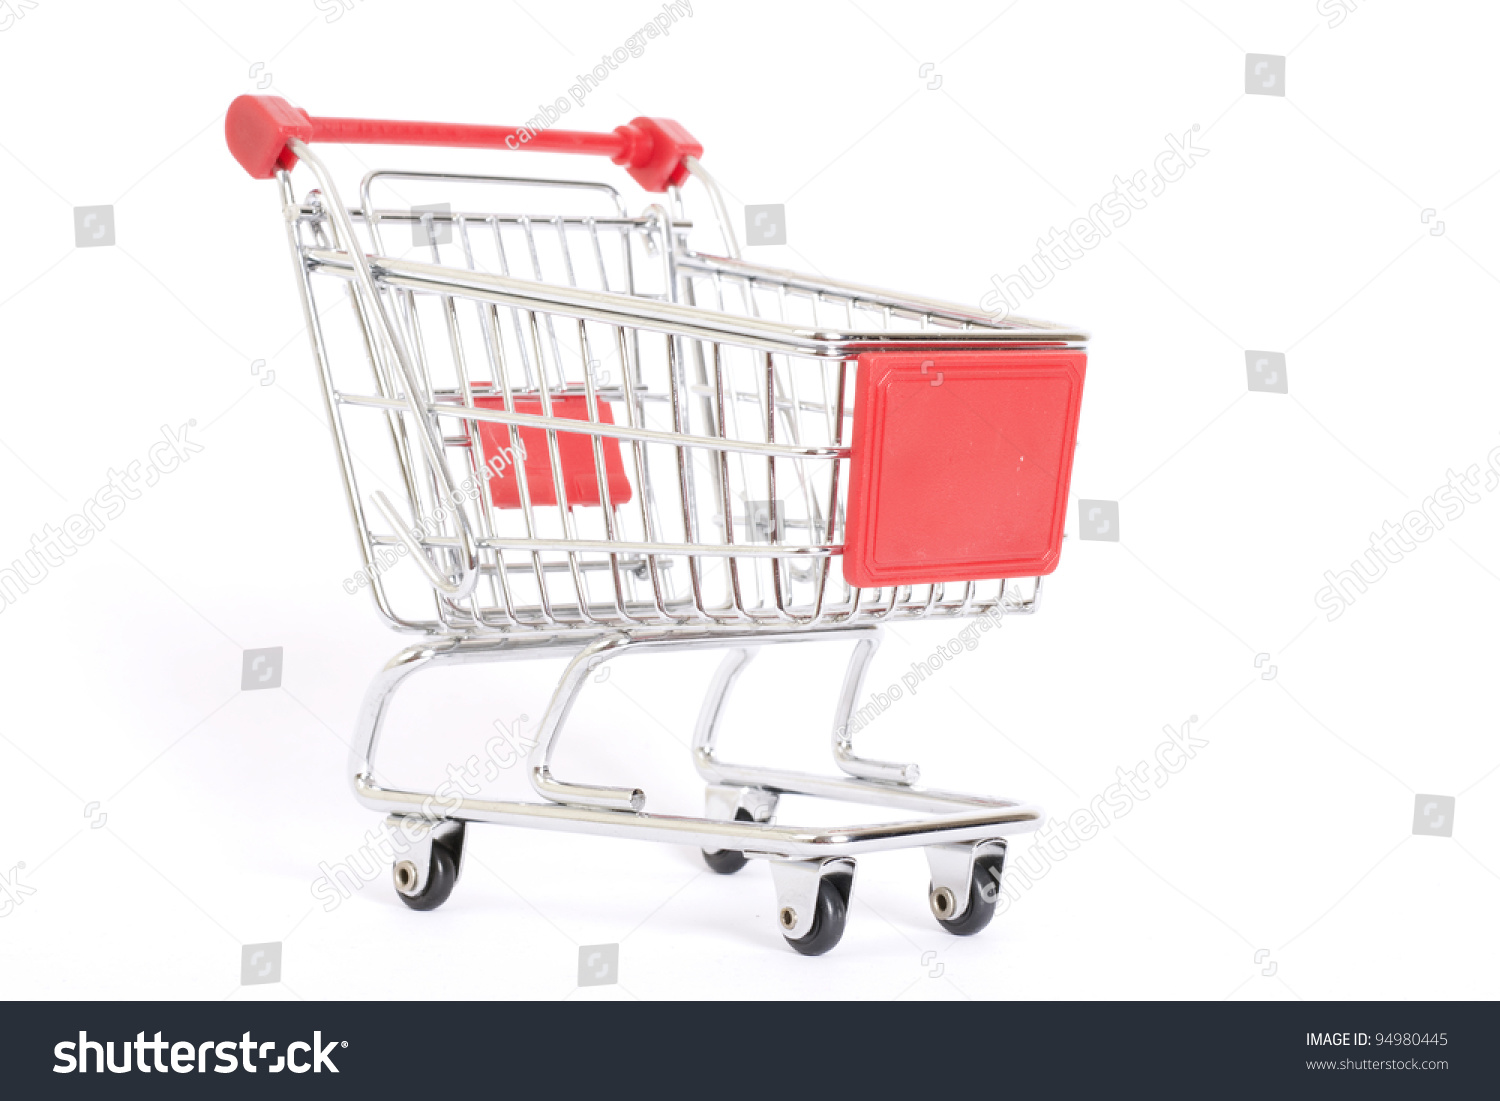 Edit Photos Free Online - shopping cart | Shutterstock Editor